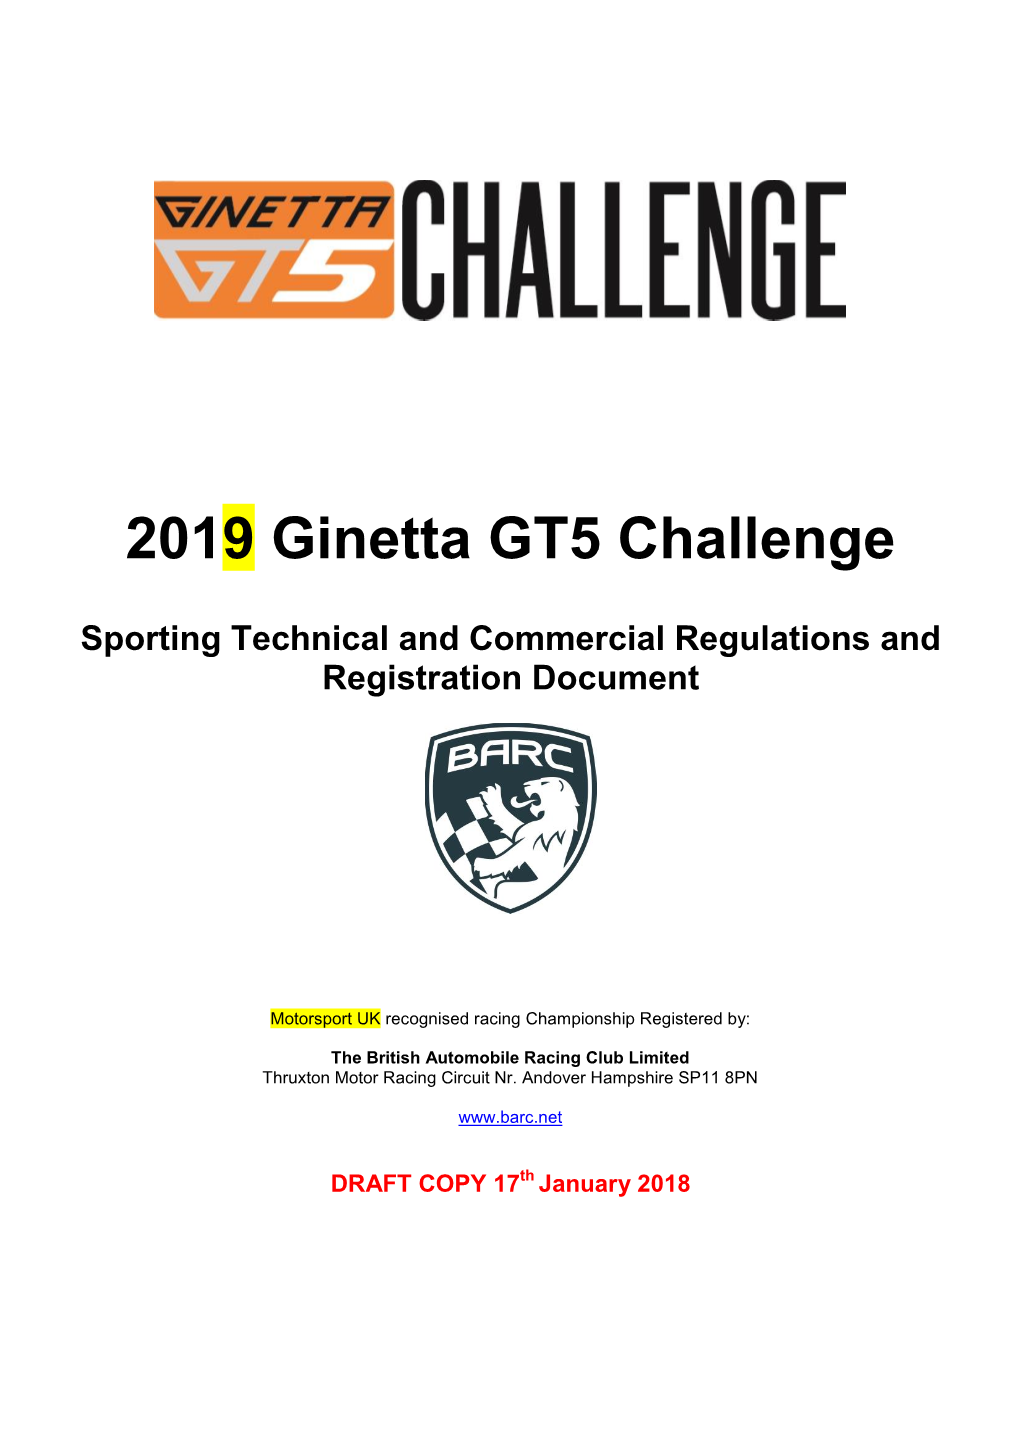 2018 Protyre Motorsport Ginetta GT5 Challenge Regulations